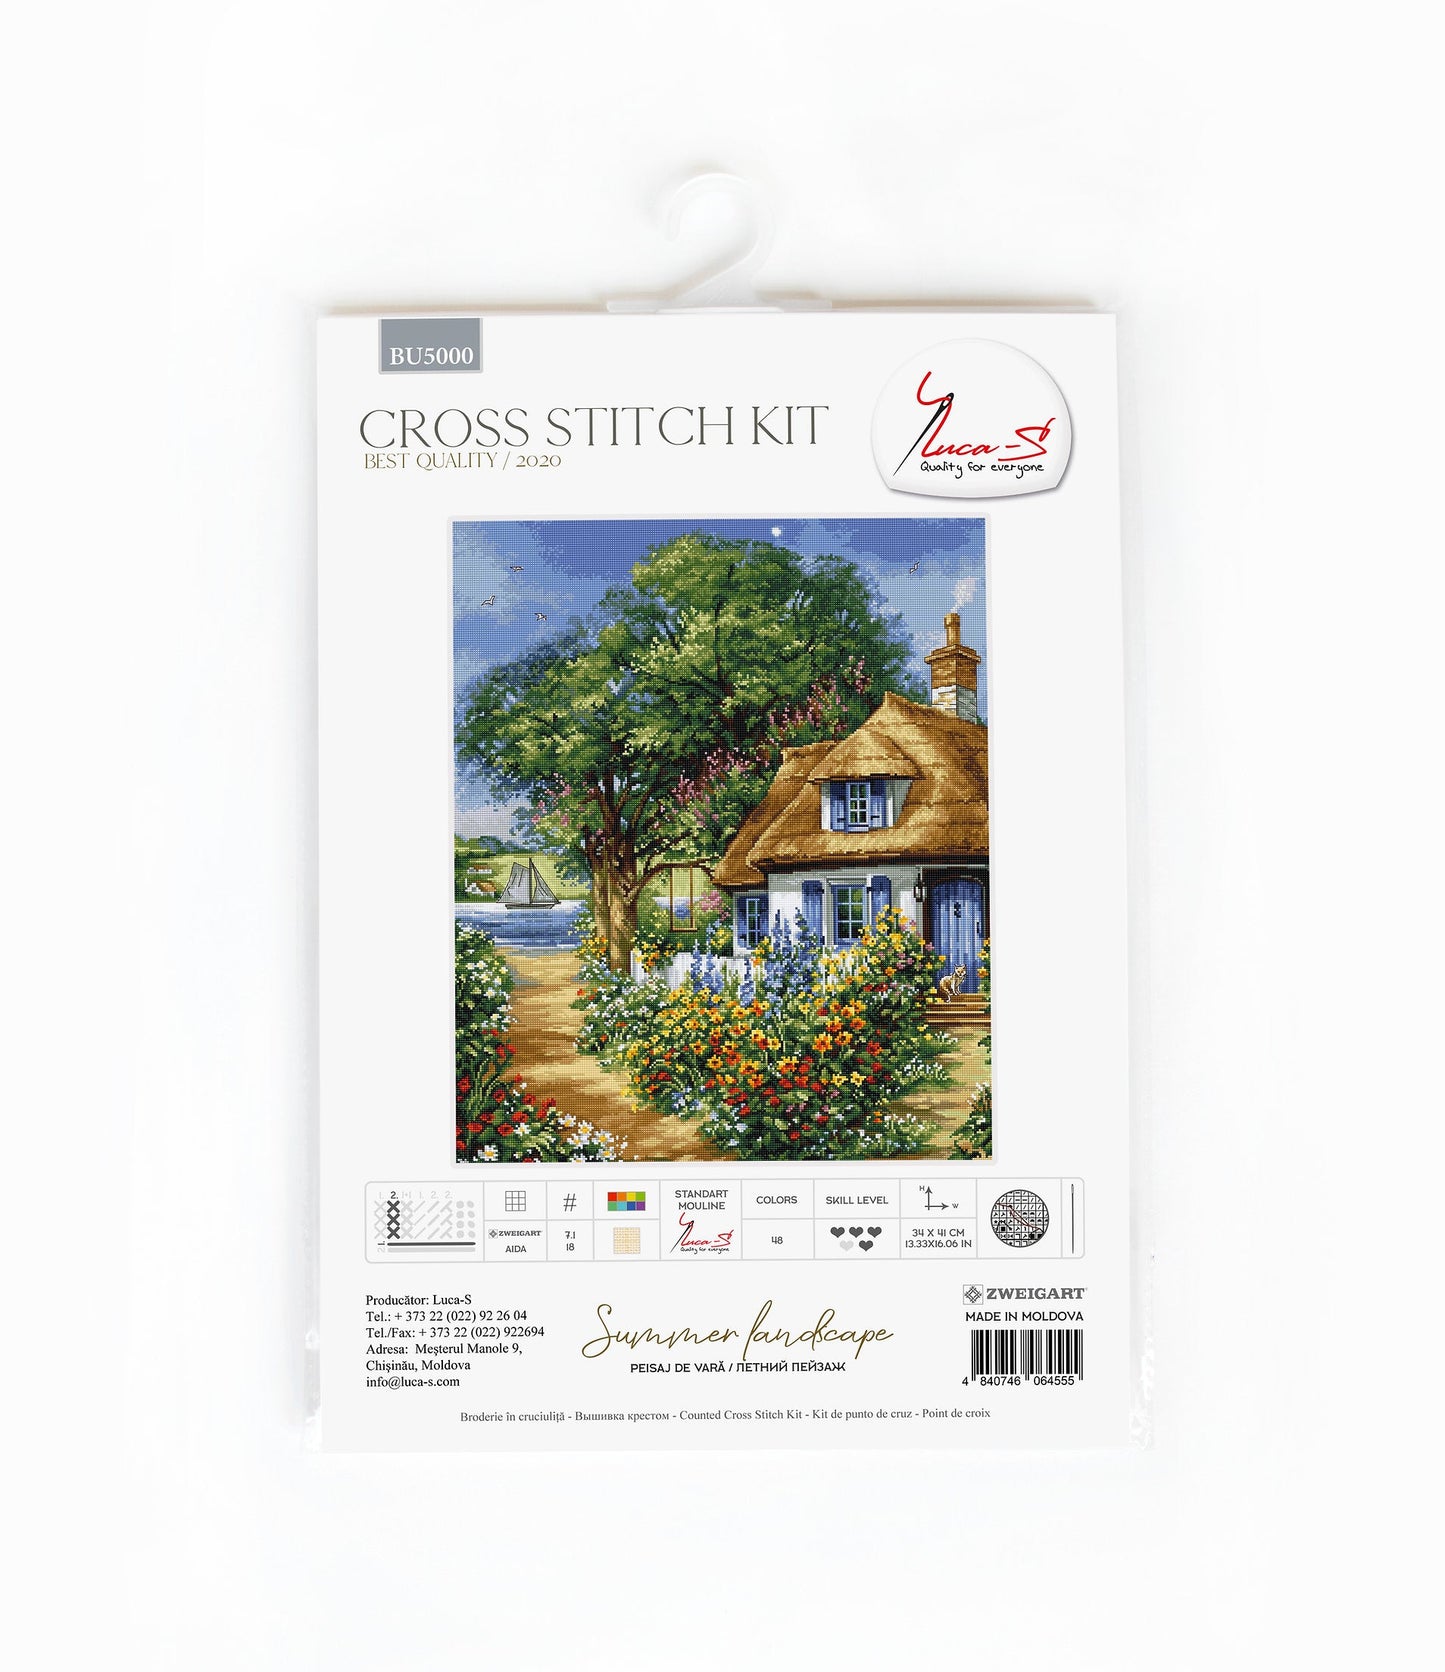 Cross Stitch Kit Luca-S - Summer Landscape, BU5000